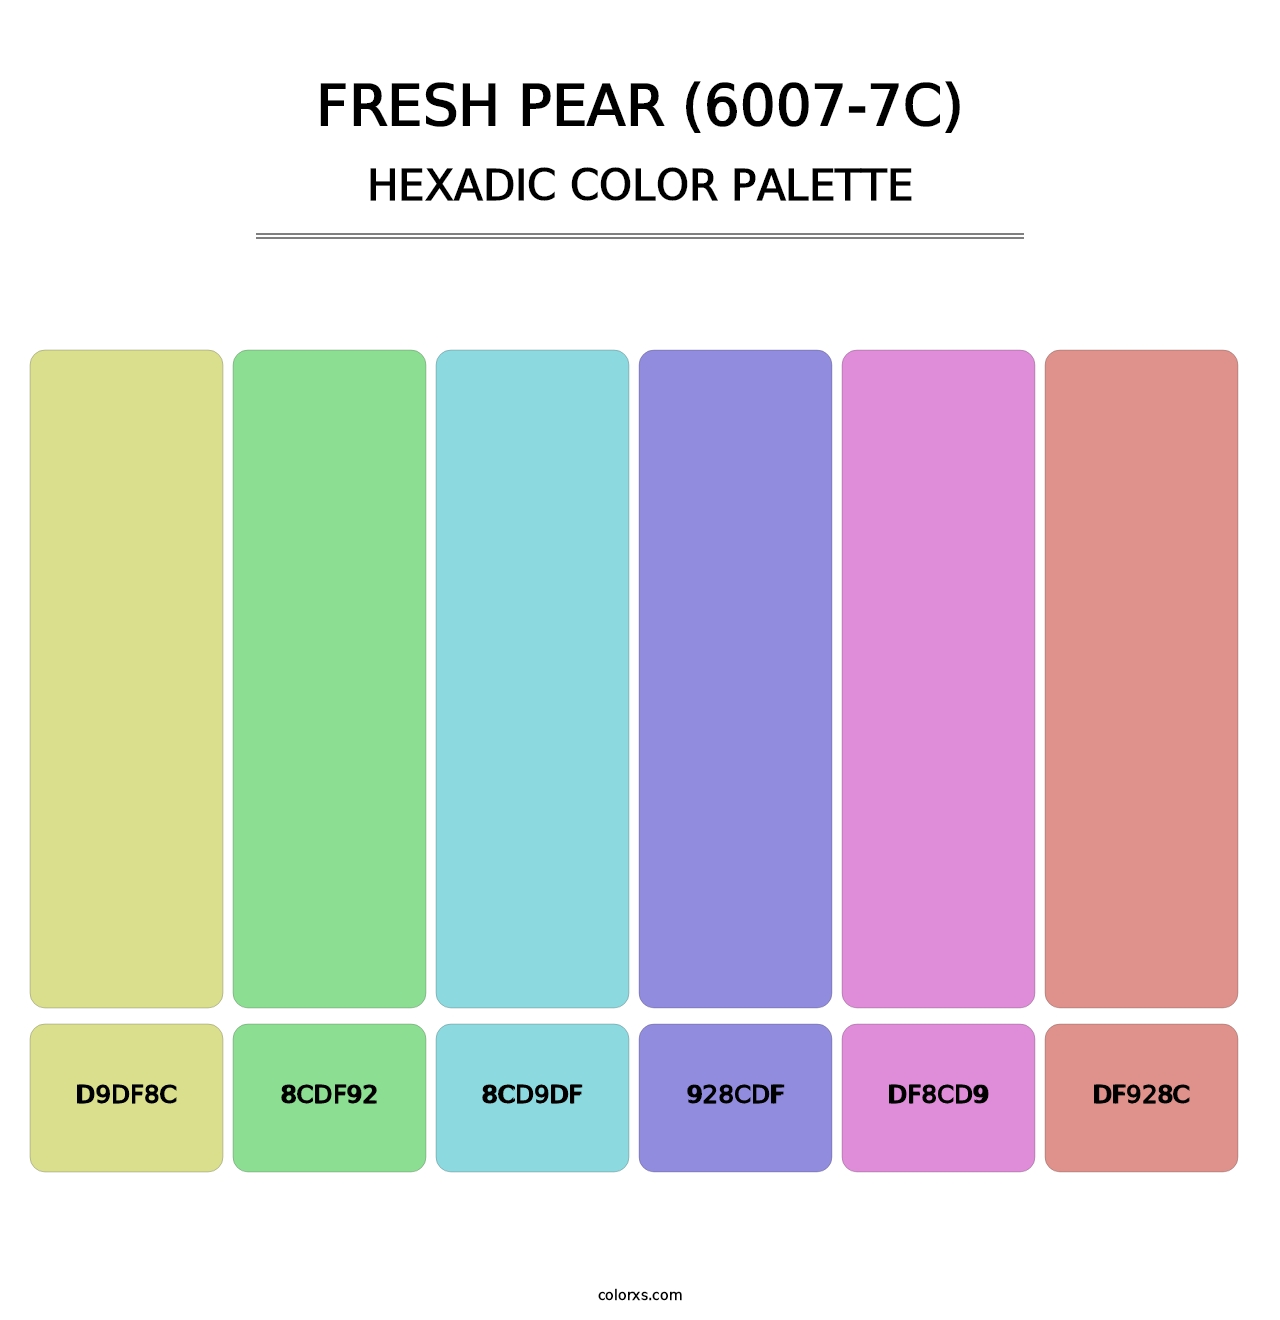 Fresh Pear (6007-7C) - Hexadic Color Palette